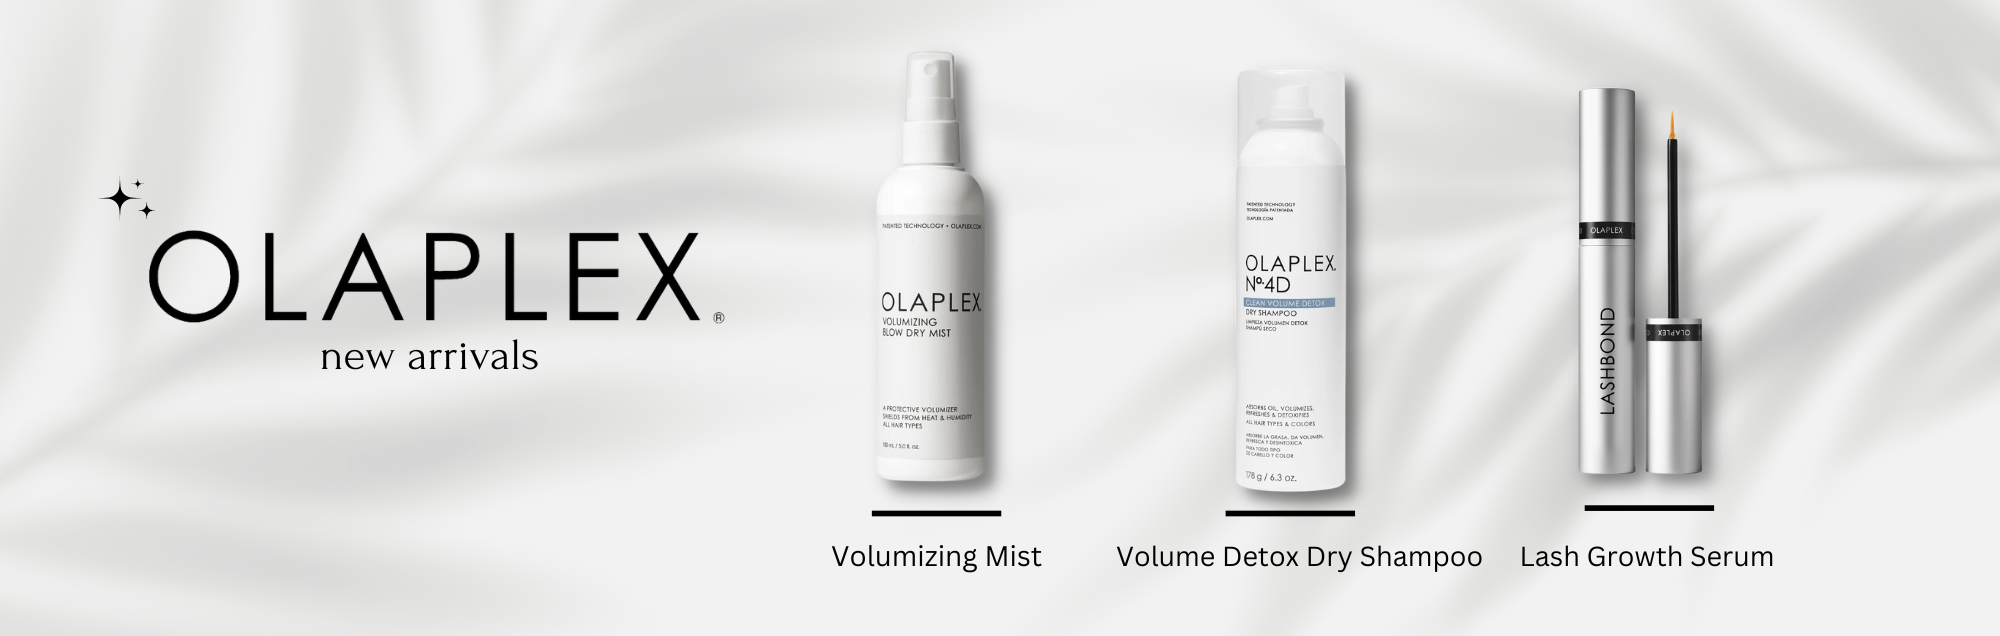 Olaplex New Arrivals - Volumizing Mist, Volume Detox Dry Shampoo, and Lash Growth Serum. Click the picture background to shop!